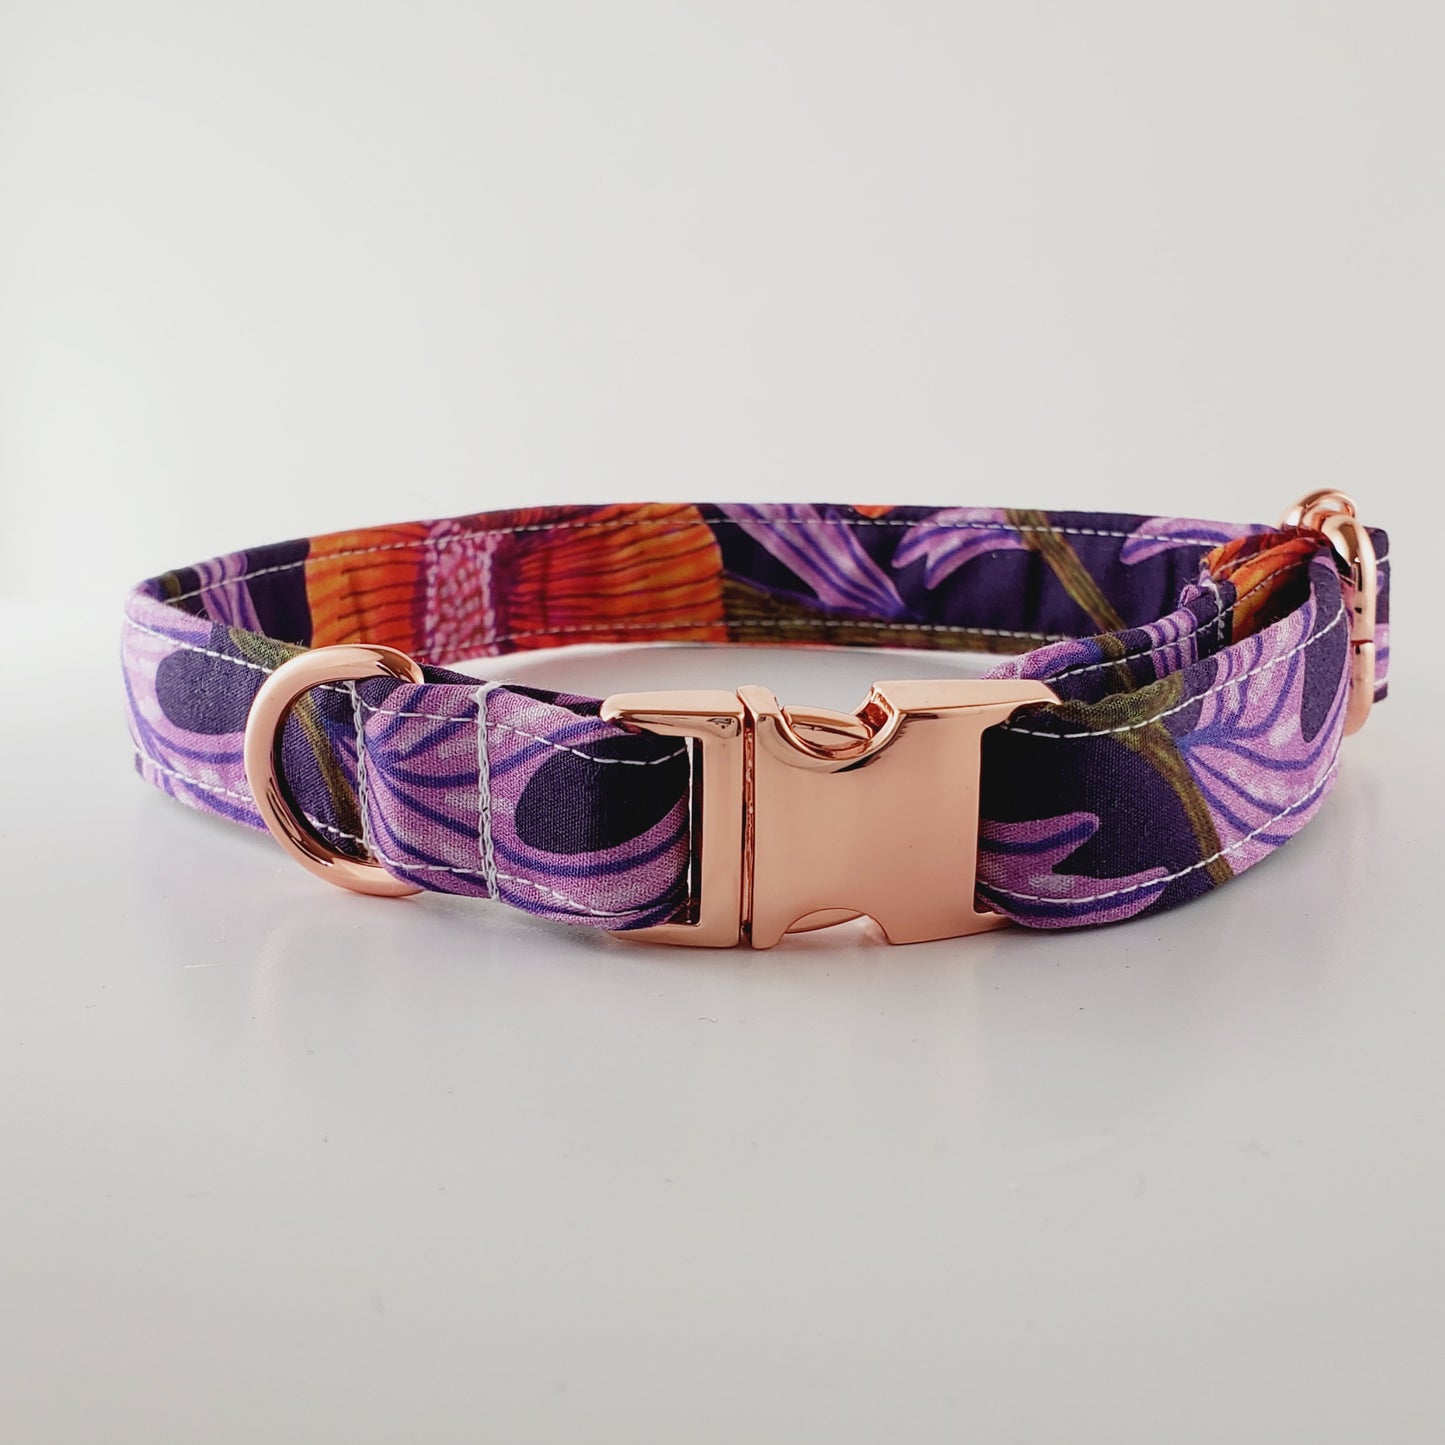 Small Australian purple and orange fabric dog collar